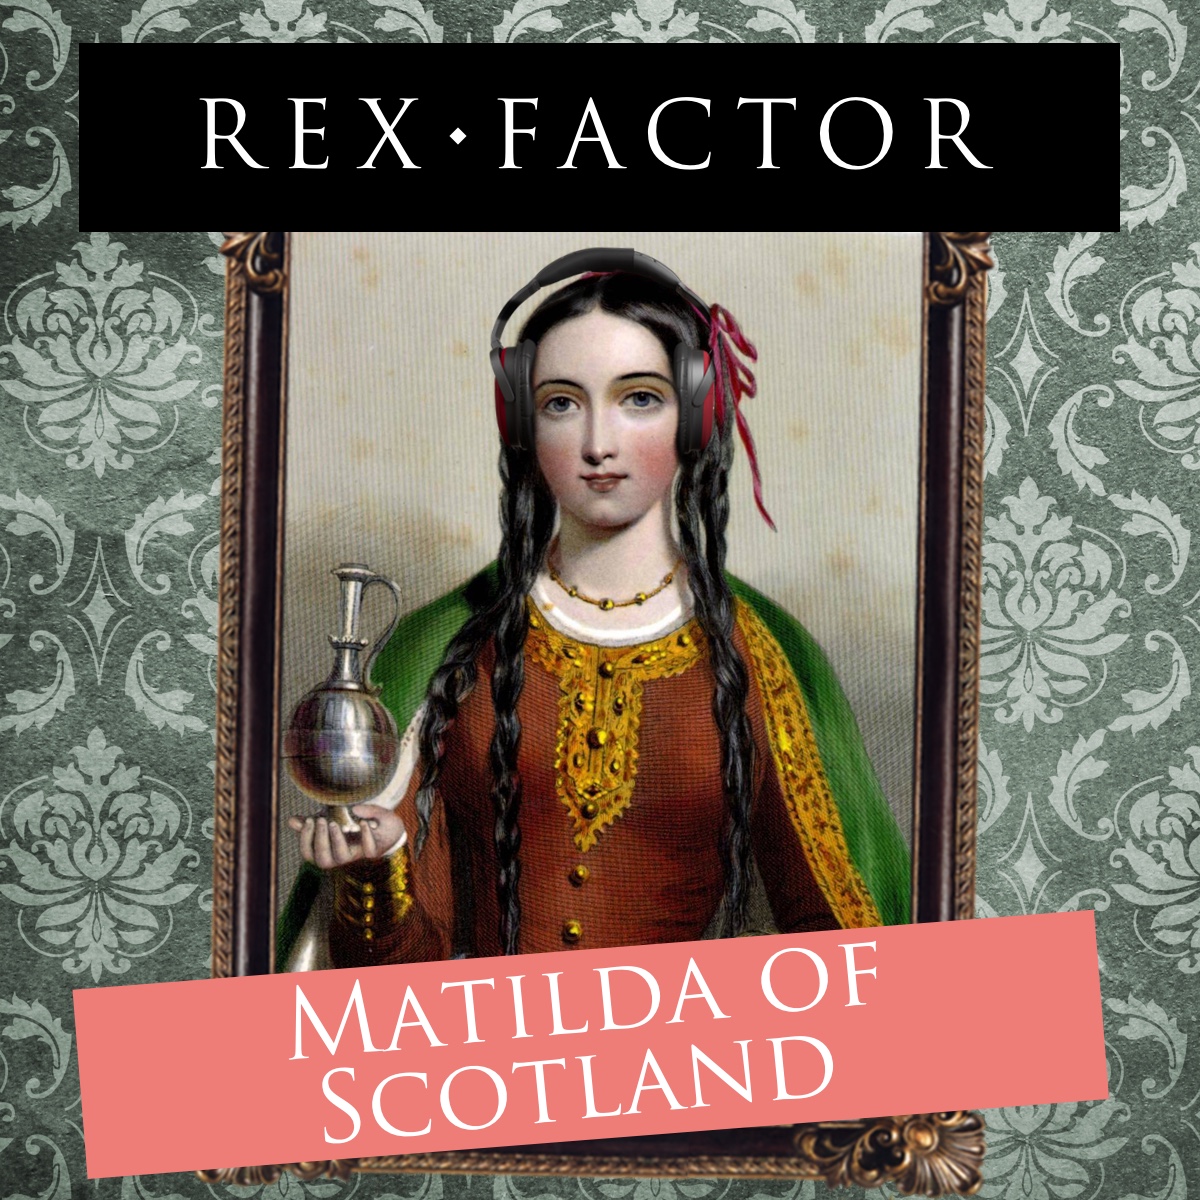 S3.19 Matilda of Scotland